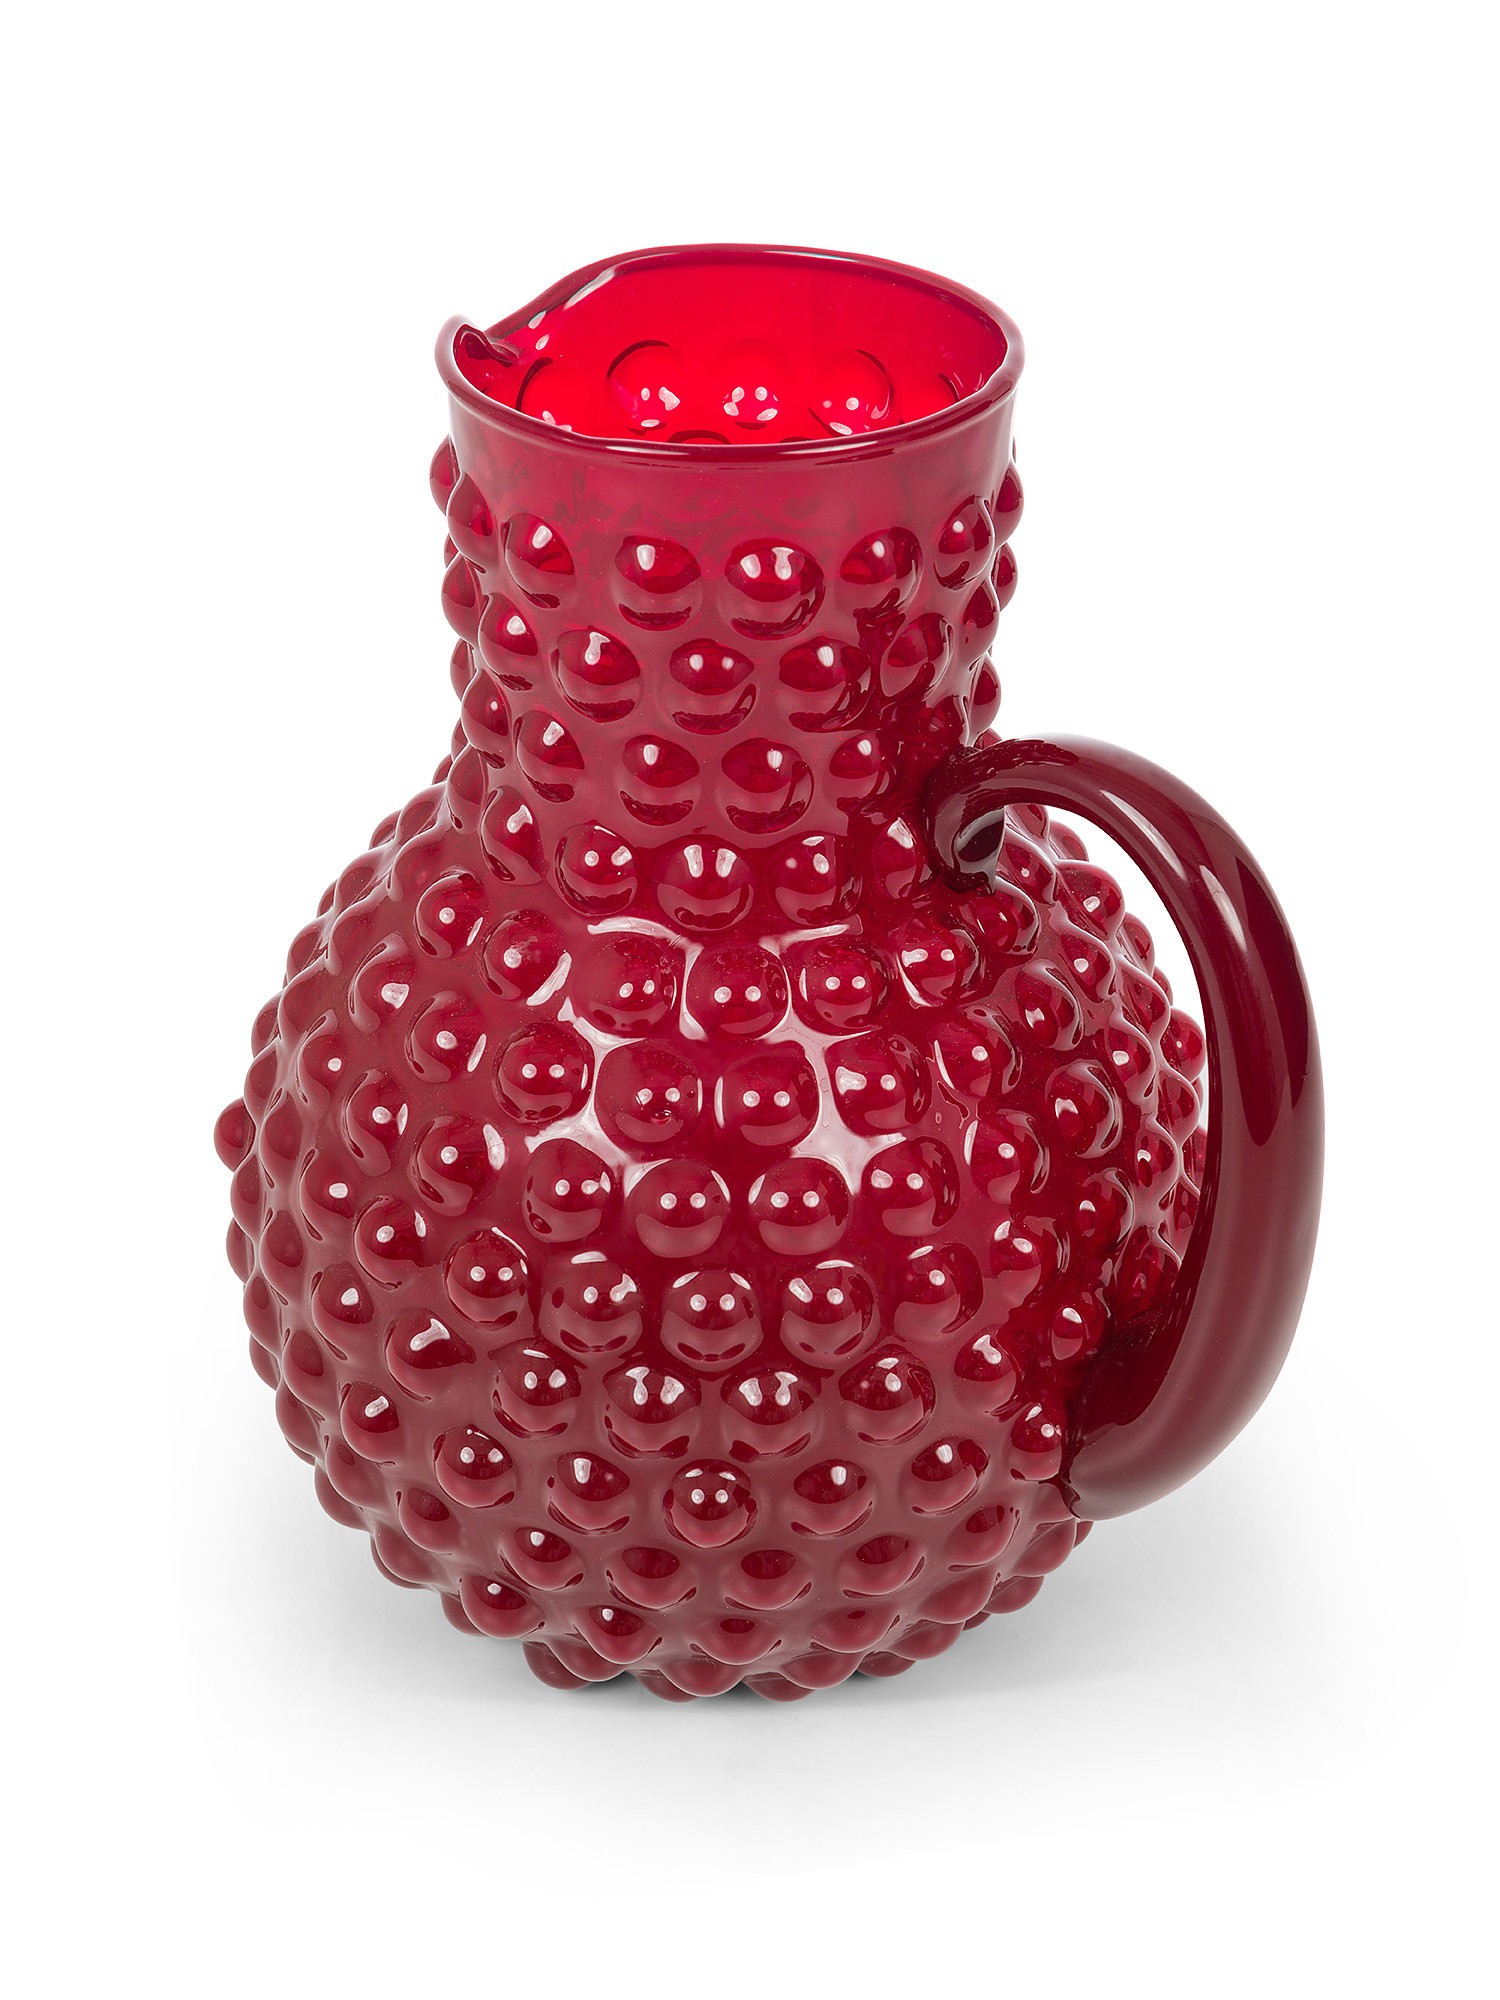 Caraffa vetro effetto bolle, Rosso, large image number 1